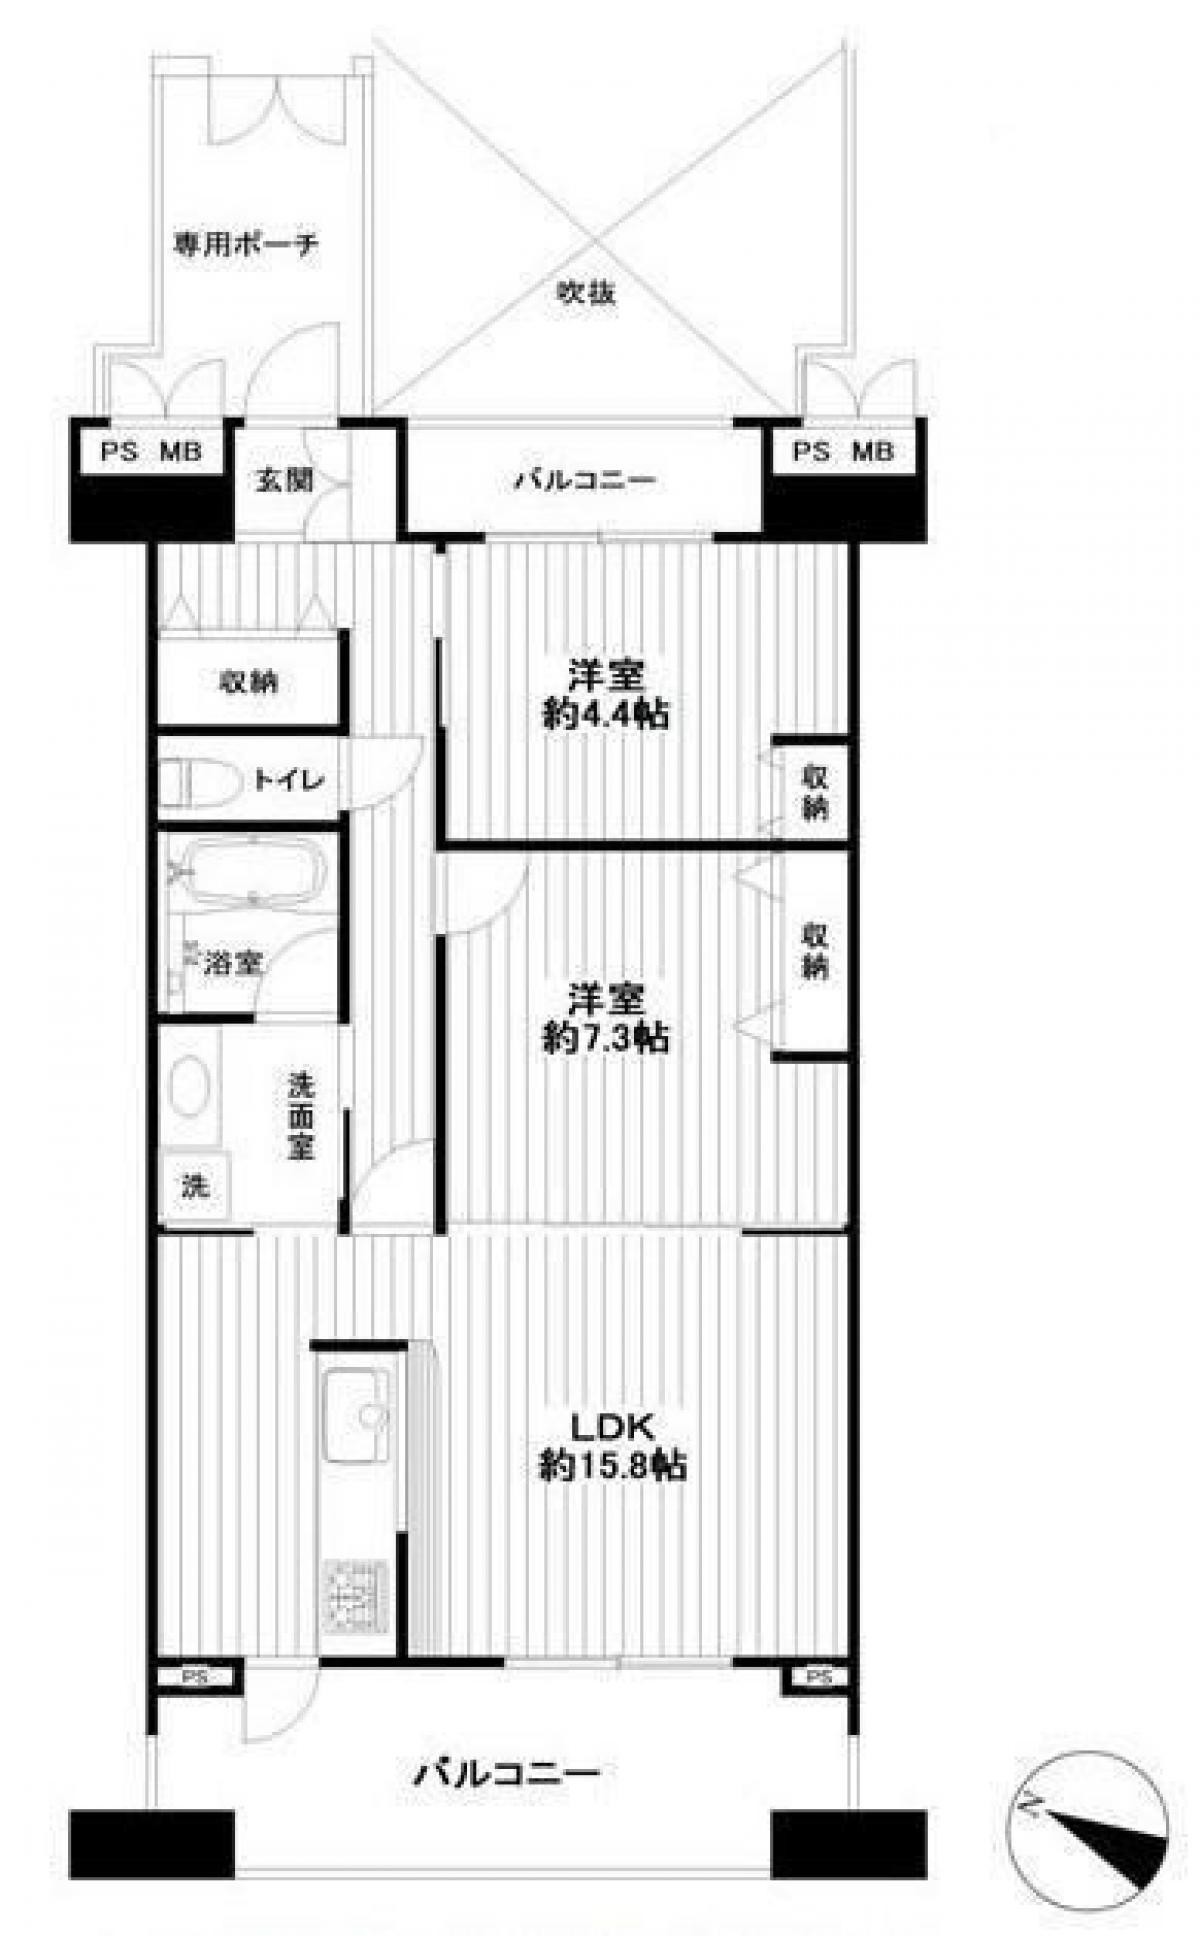 Picture of Apartment For Sale in Yokohama Shi Konan Ku, Kanagawa, Japan